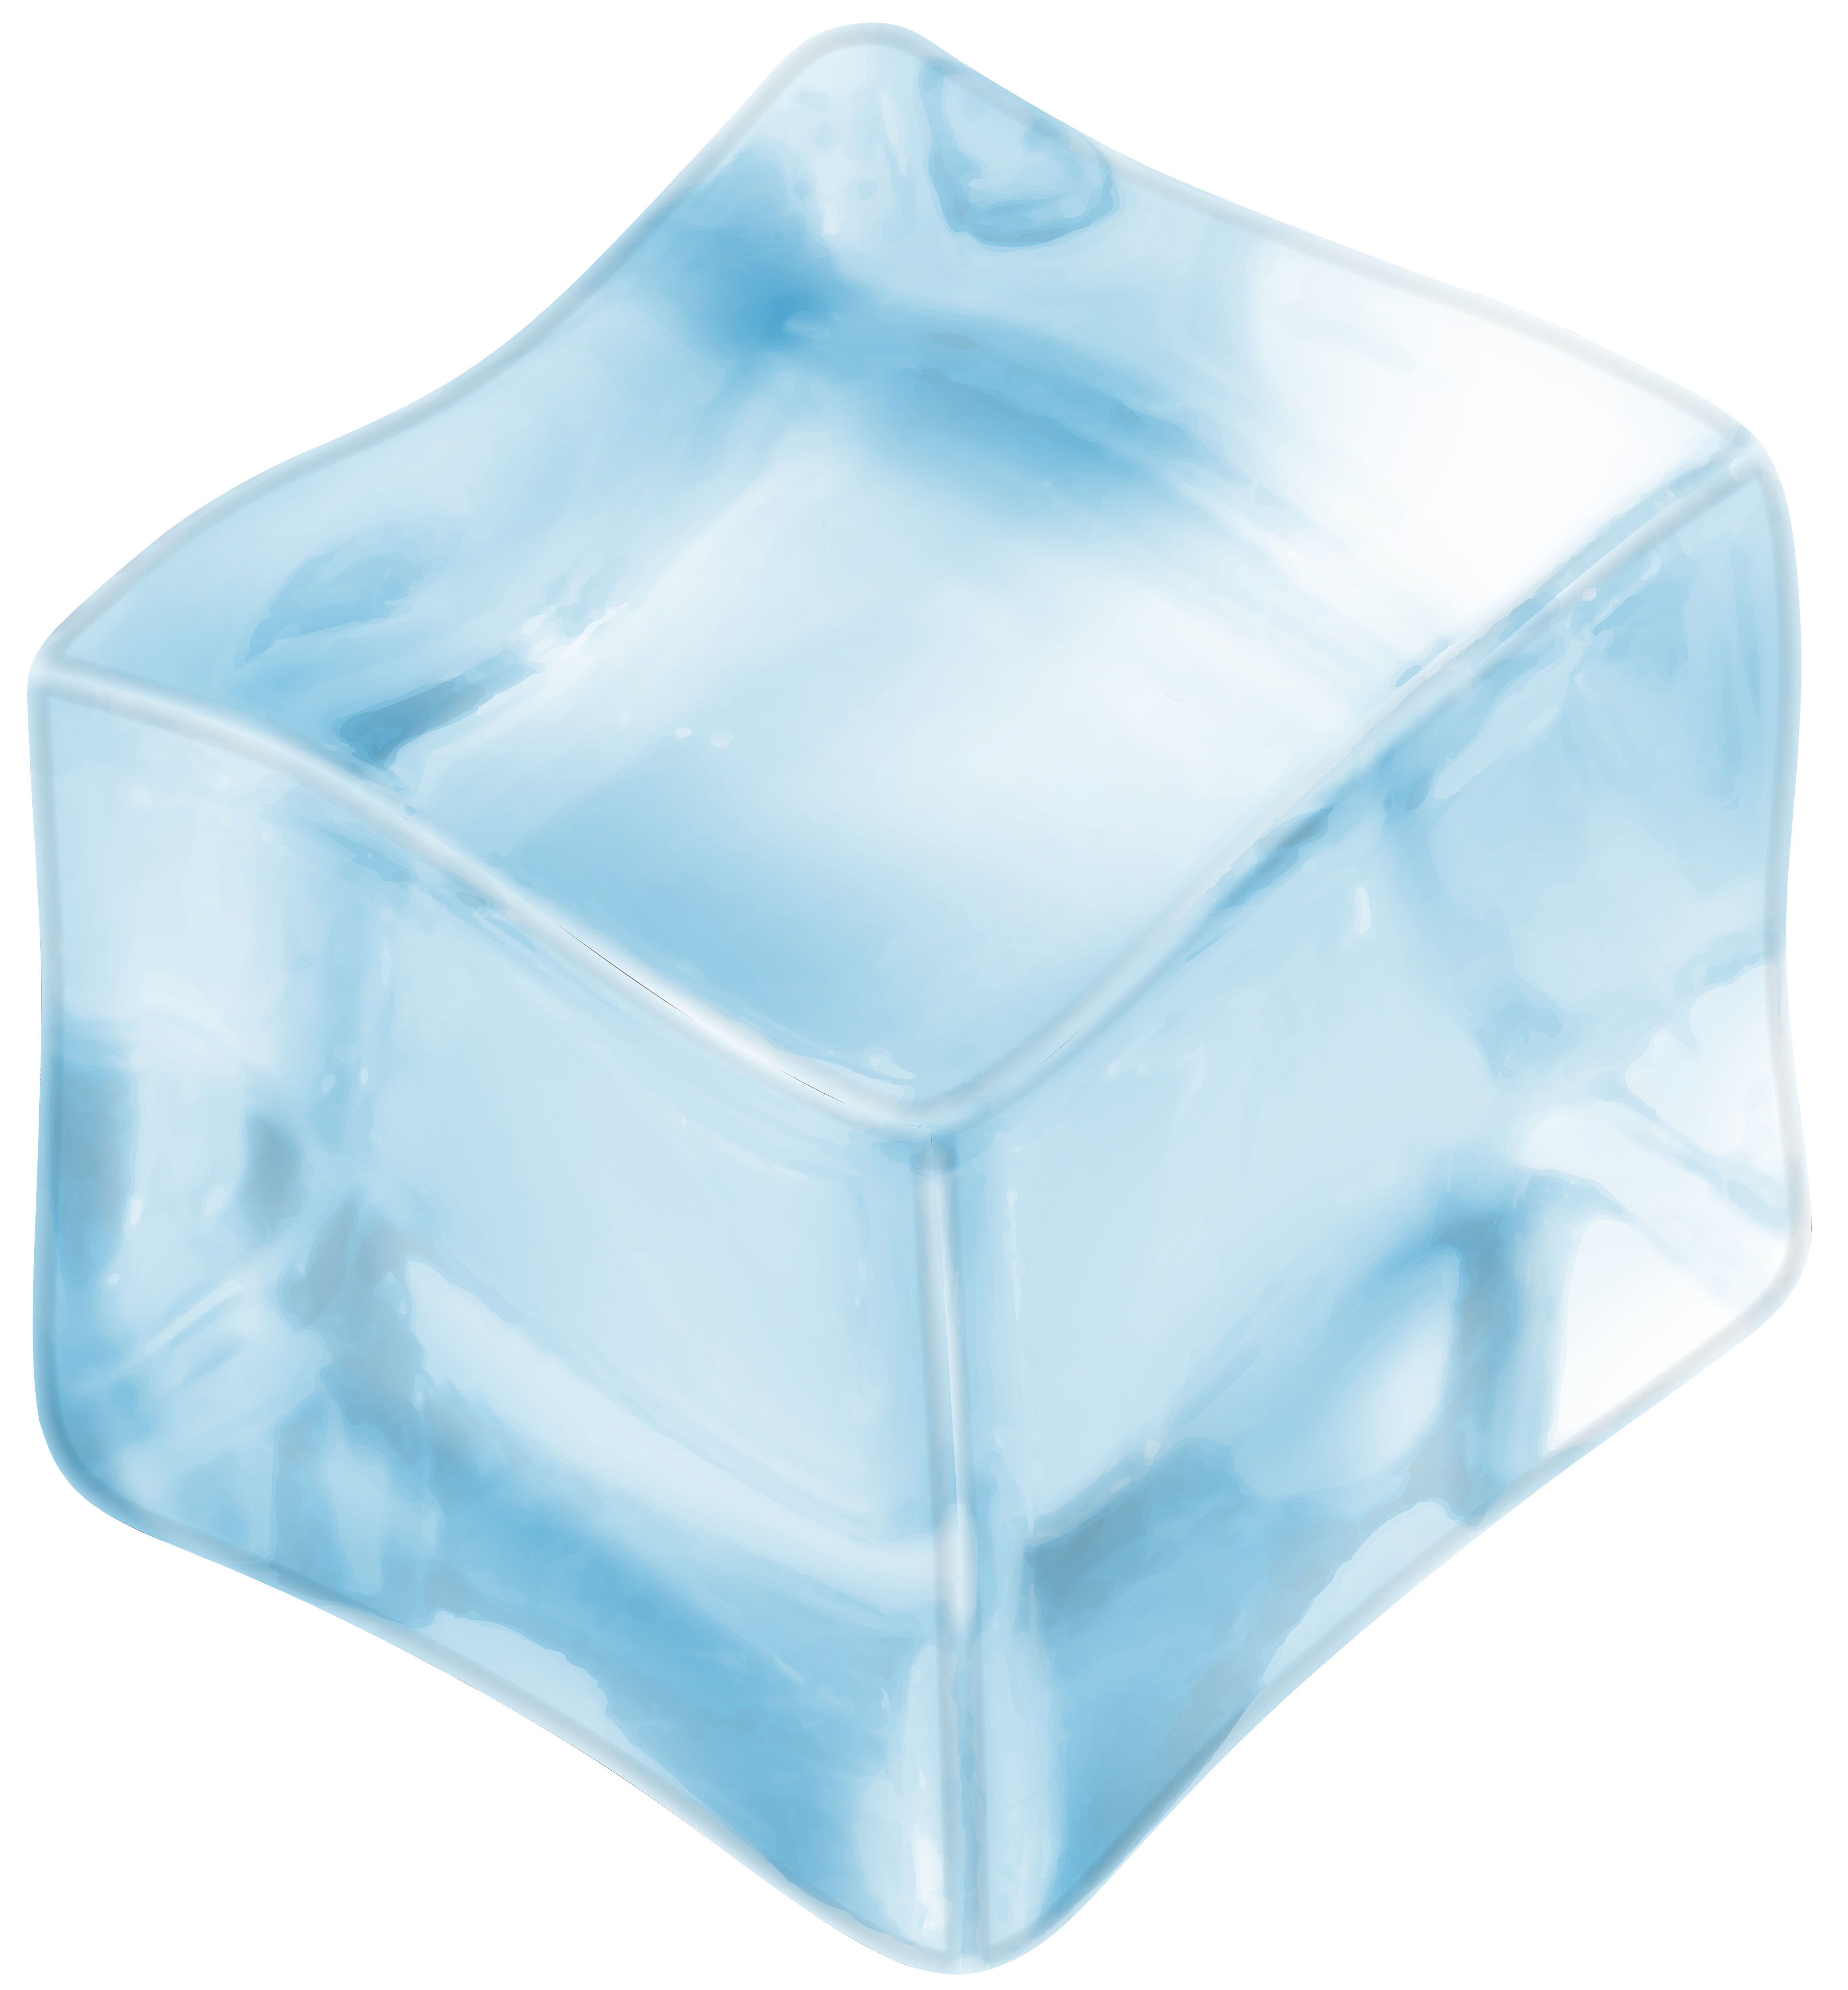 ice cube clipart